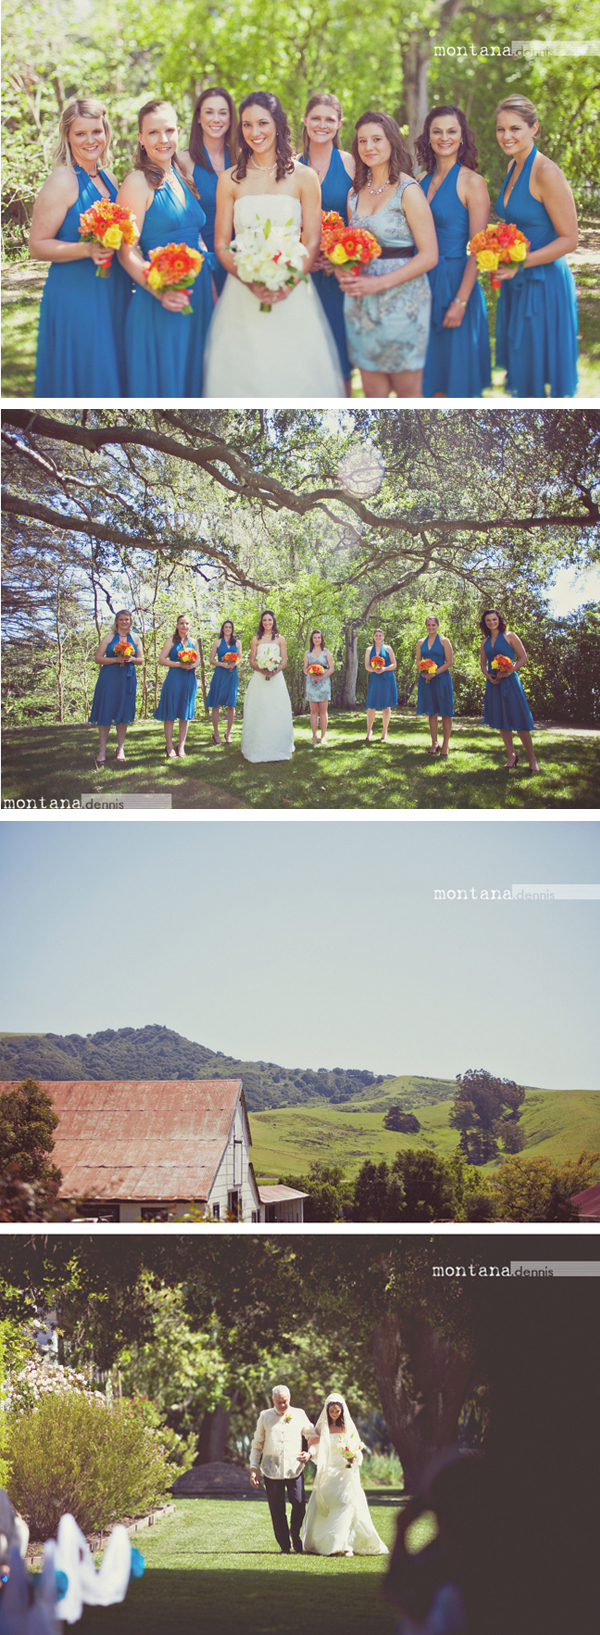 Santa Barbara Wedding Photography - Montana Dennis